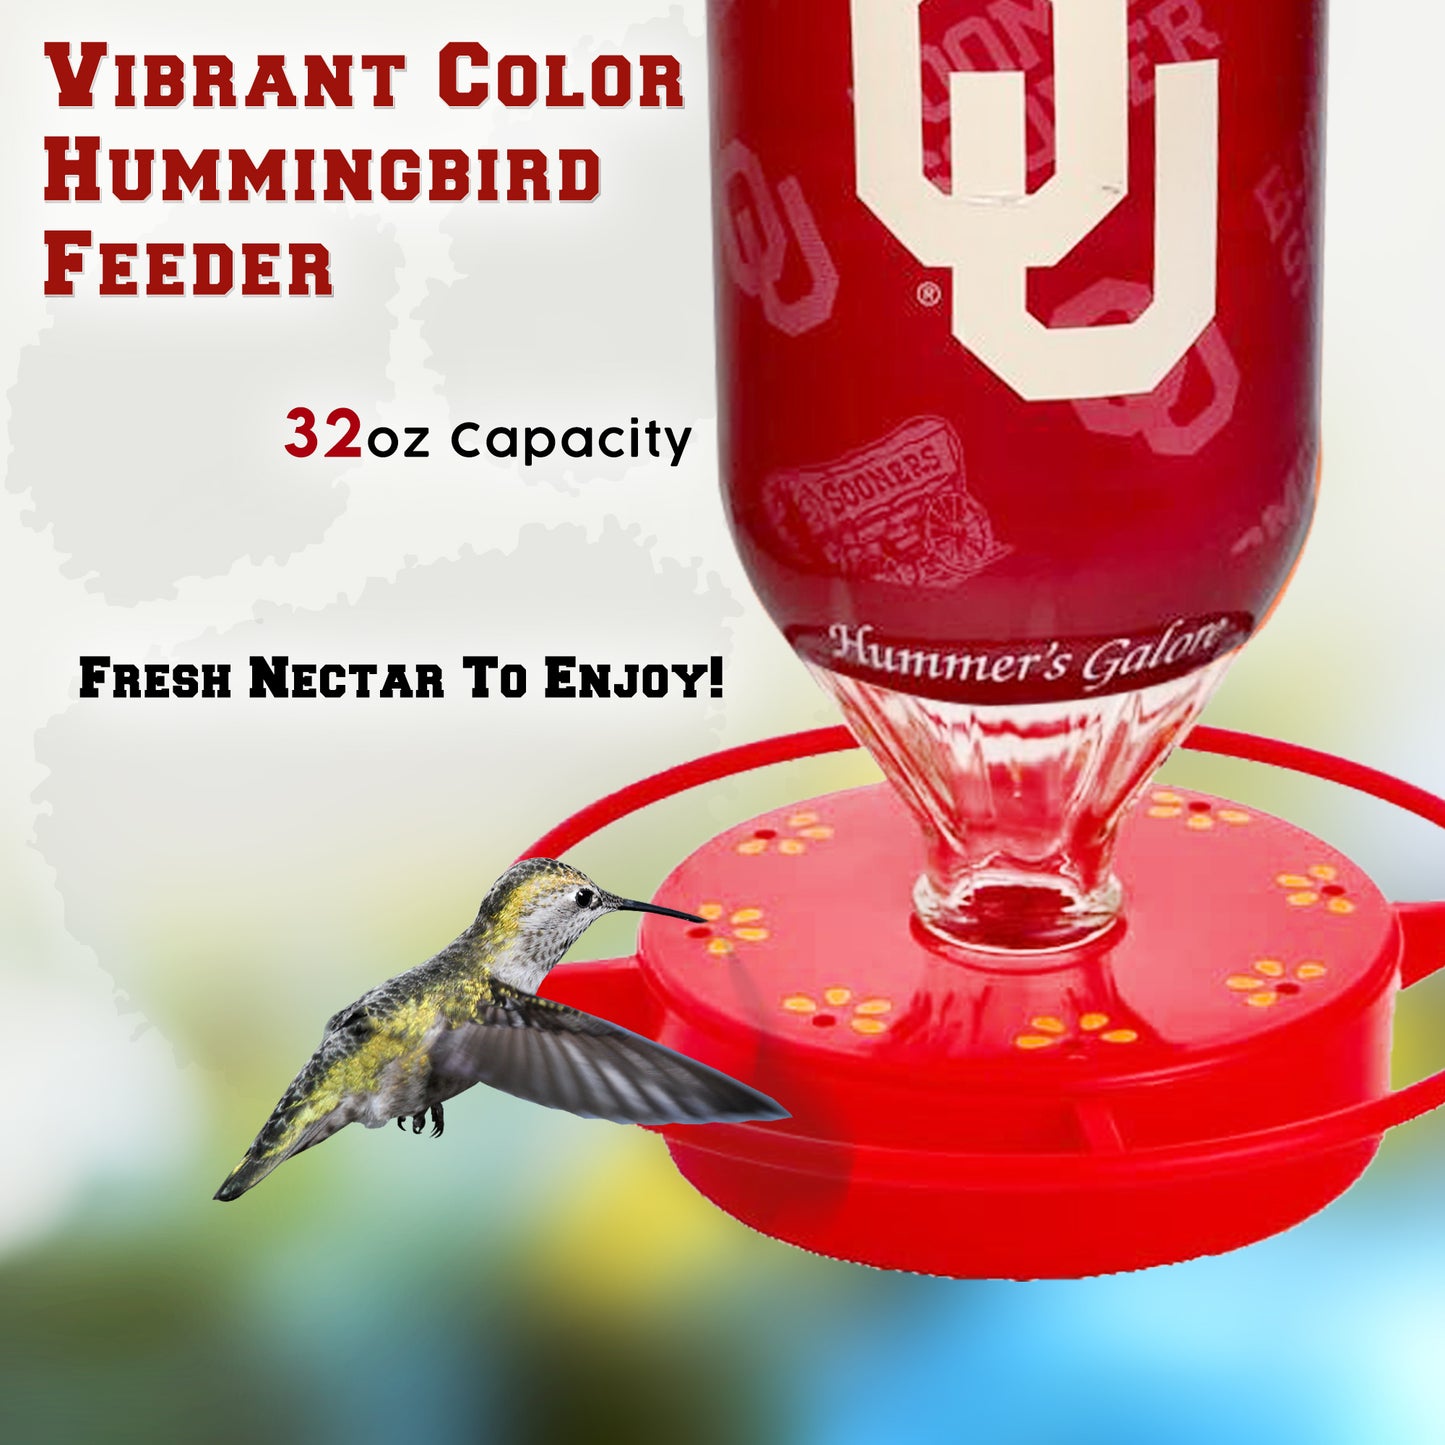 University of Oklahoma | Oklahoma Sooners Hummingbird Feeder